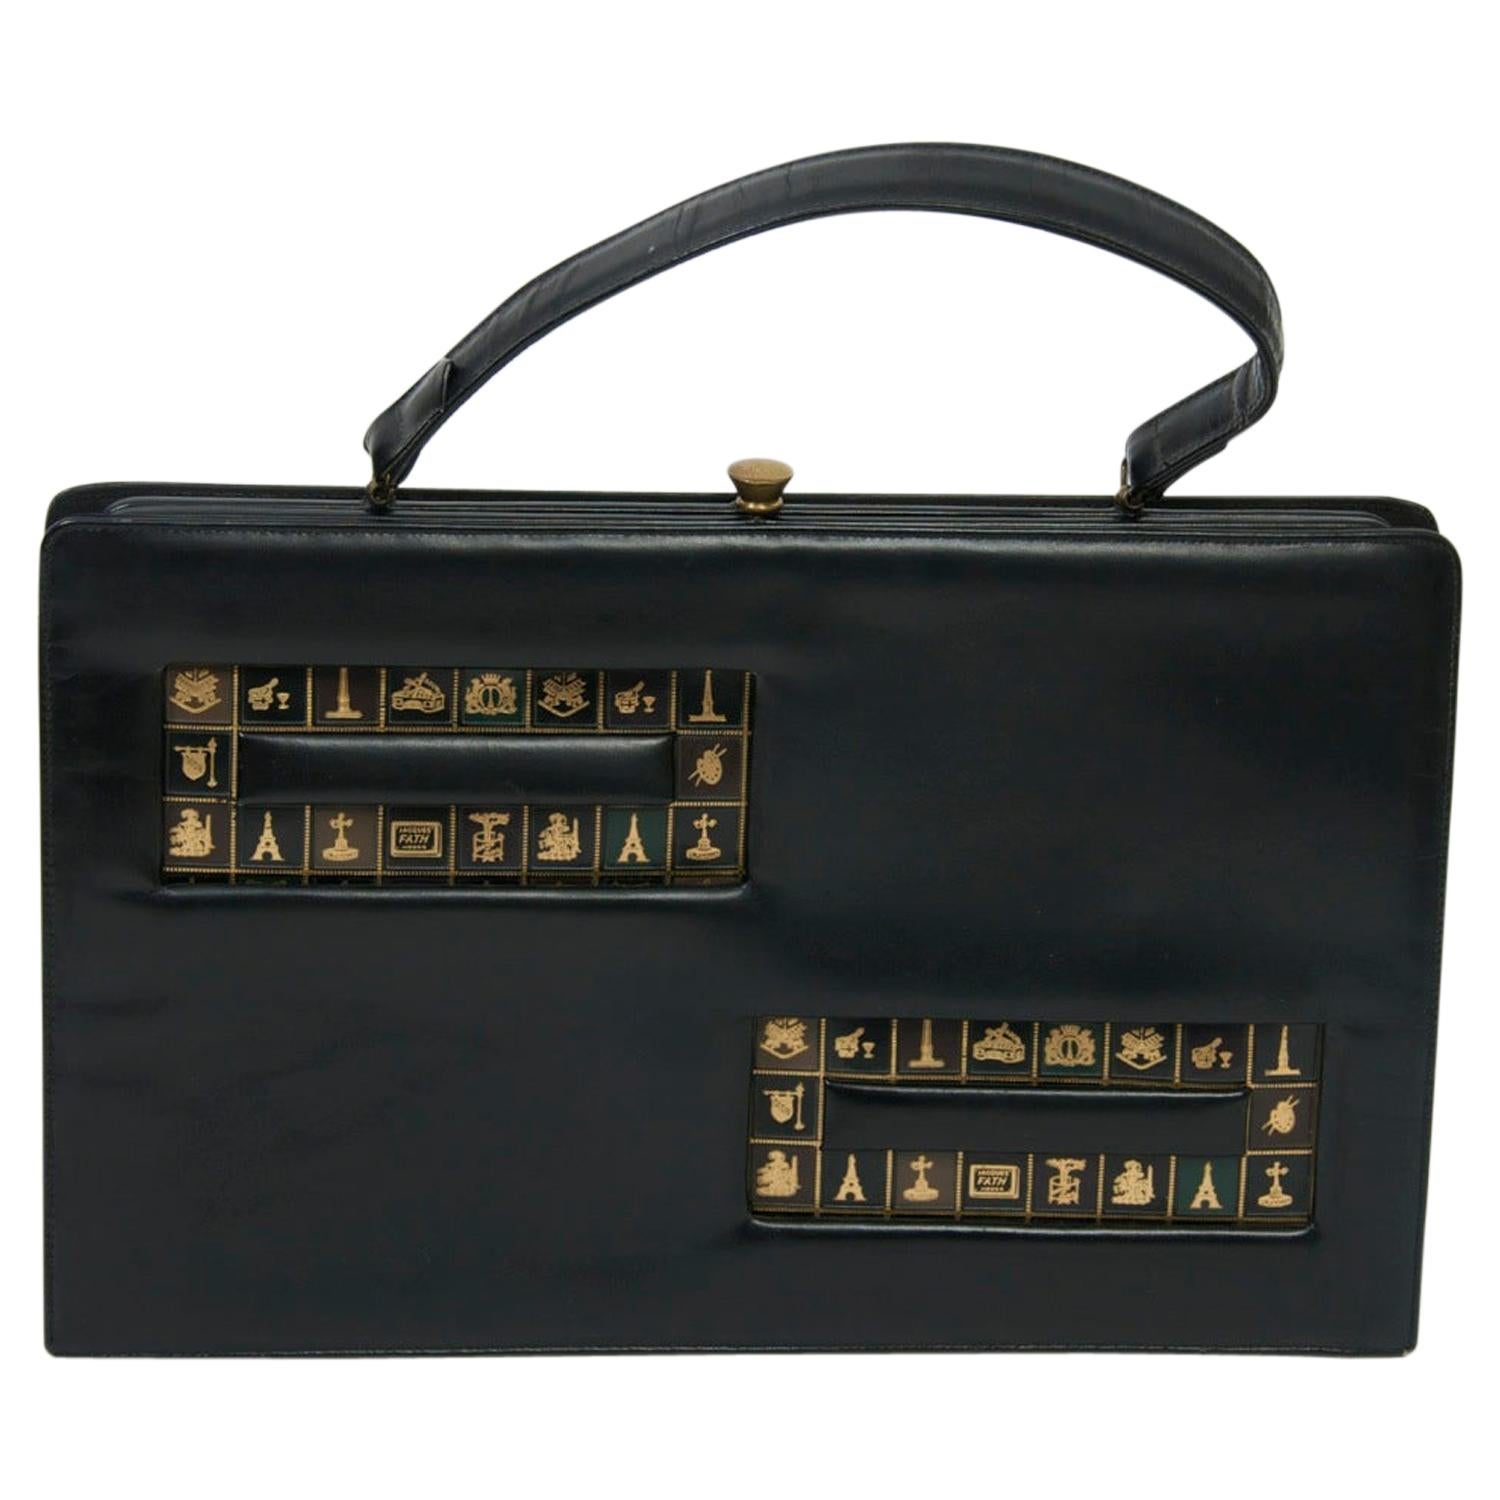 1960s Oversized Handbag with Paris Theme